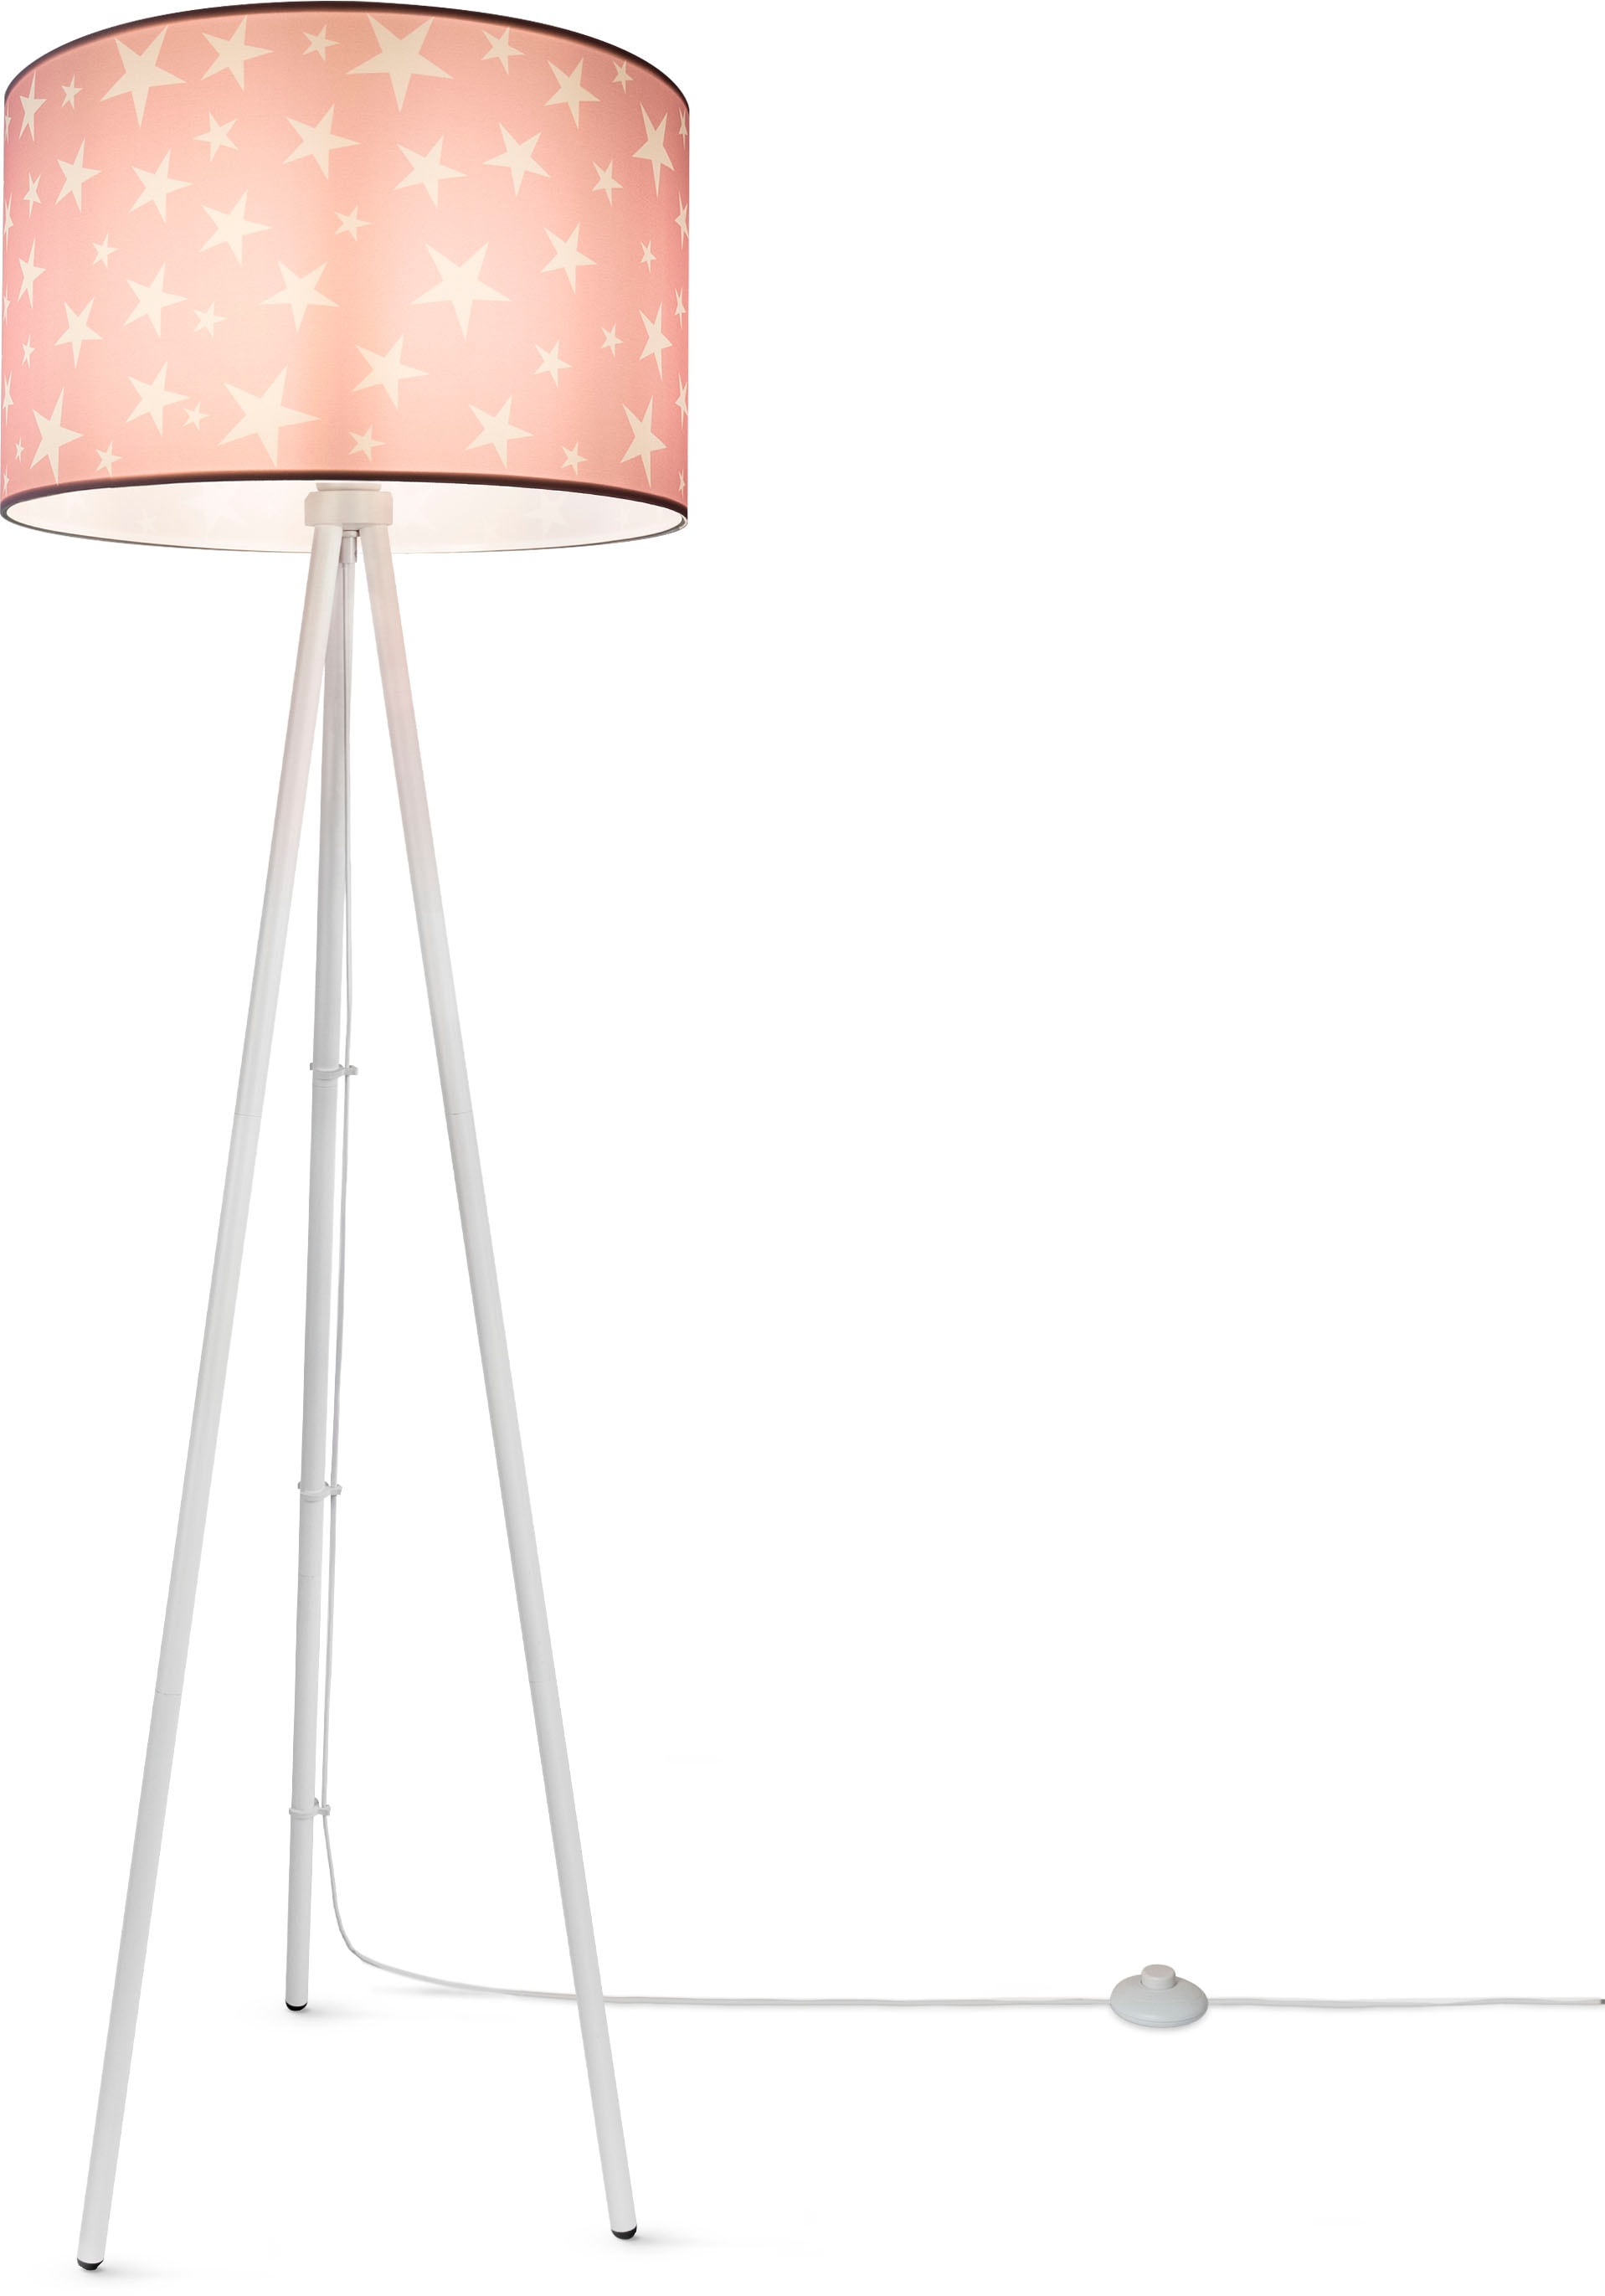 E27 BAUR Motiv, Capri«, Kinderzimmer, Paco LED Stehlampe Deko Home kaufen Stehleuchte Sternen- Kinderlampe »Trina | günstig